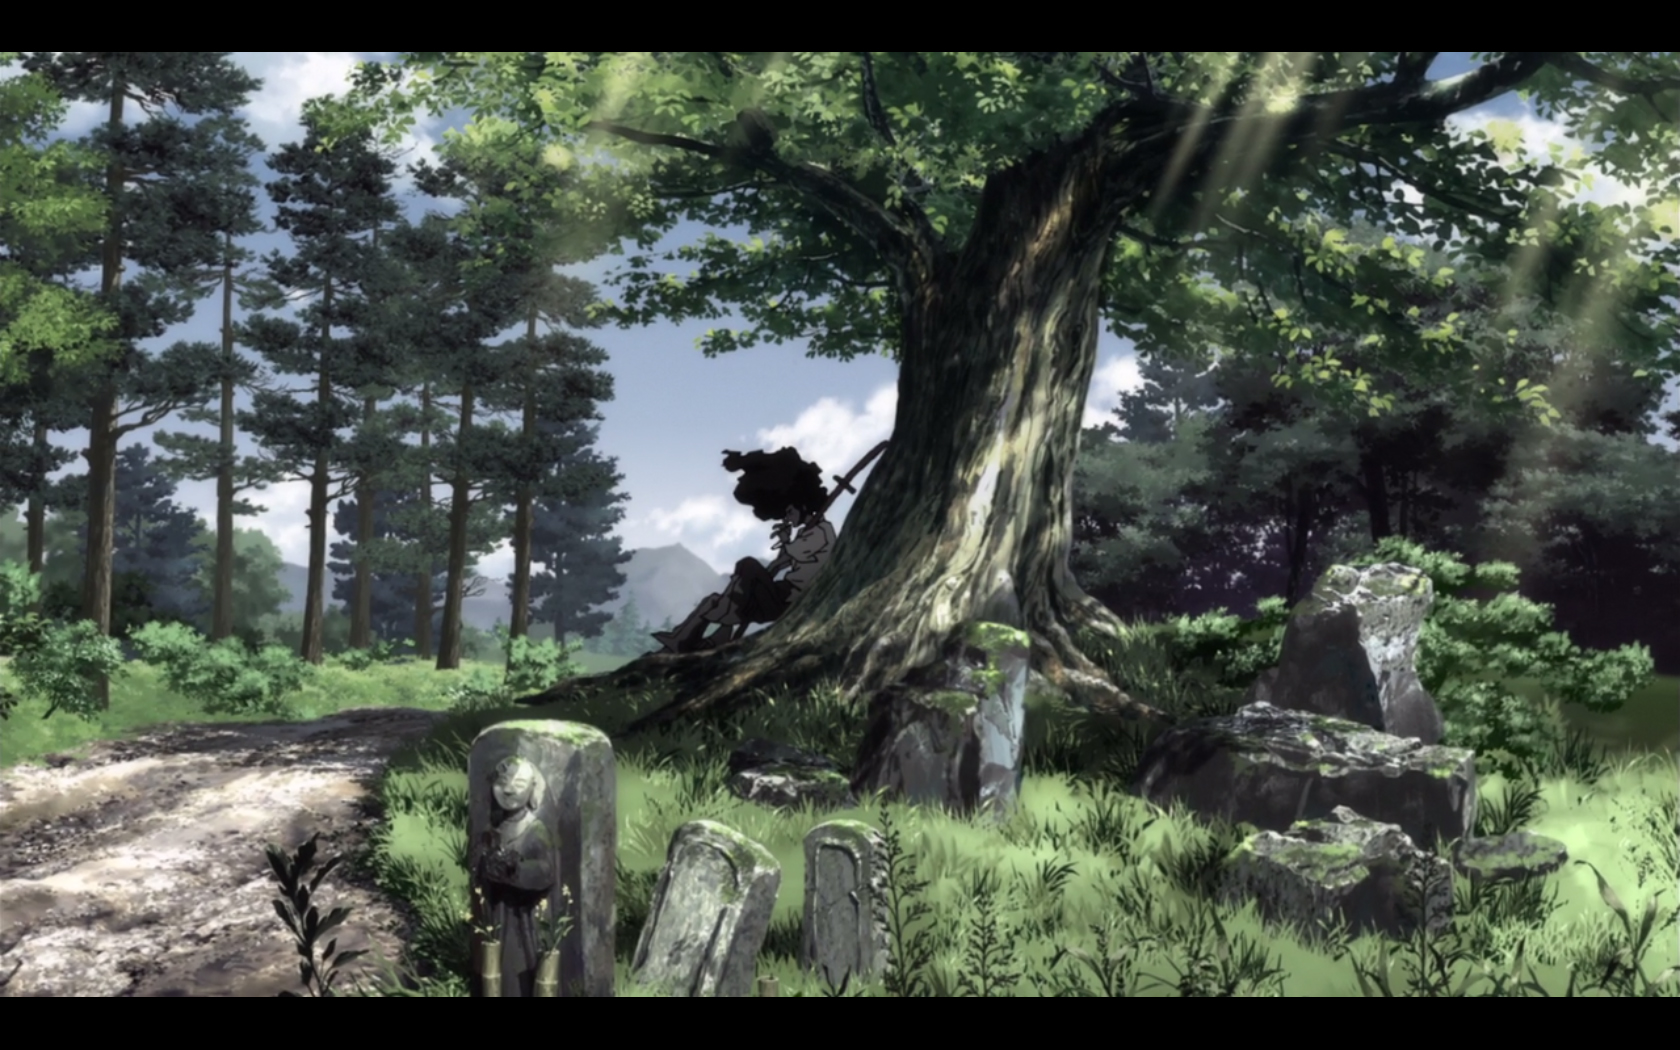 Samurai amidst serene forest backdrop